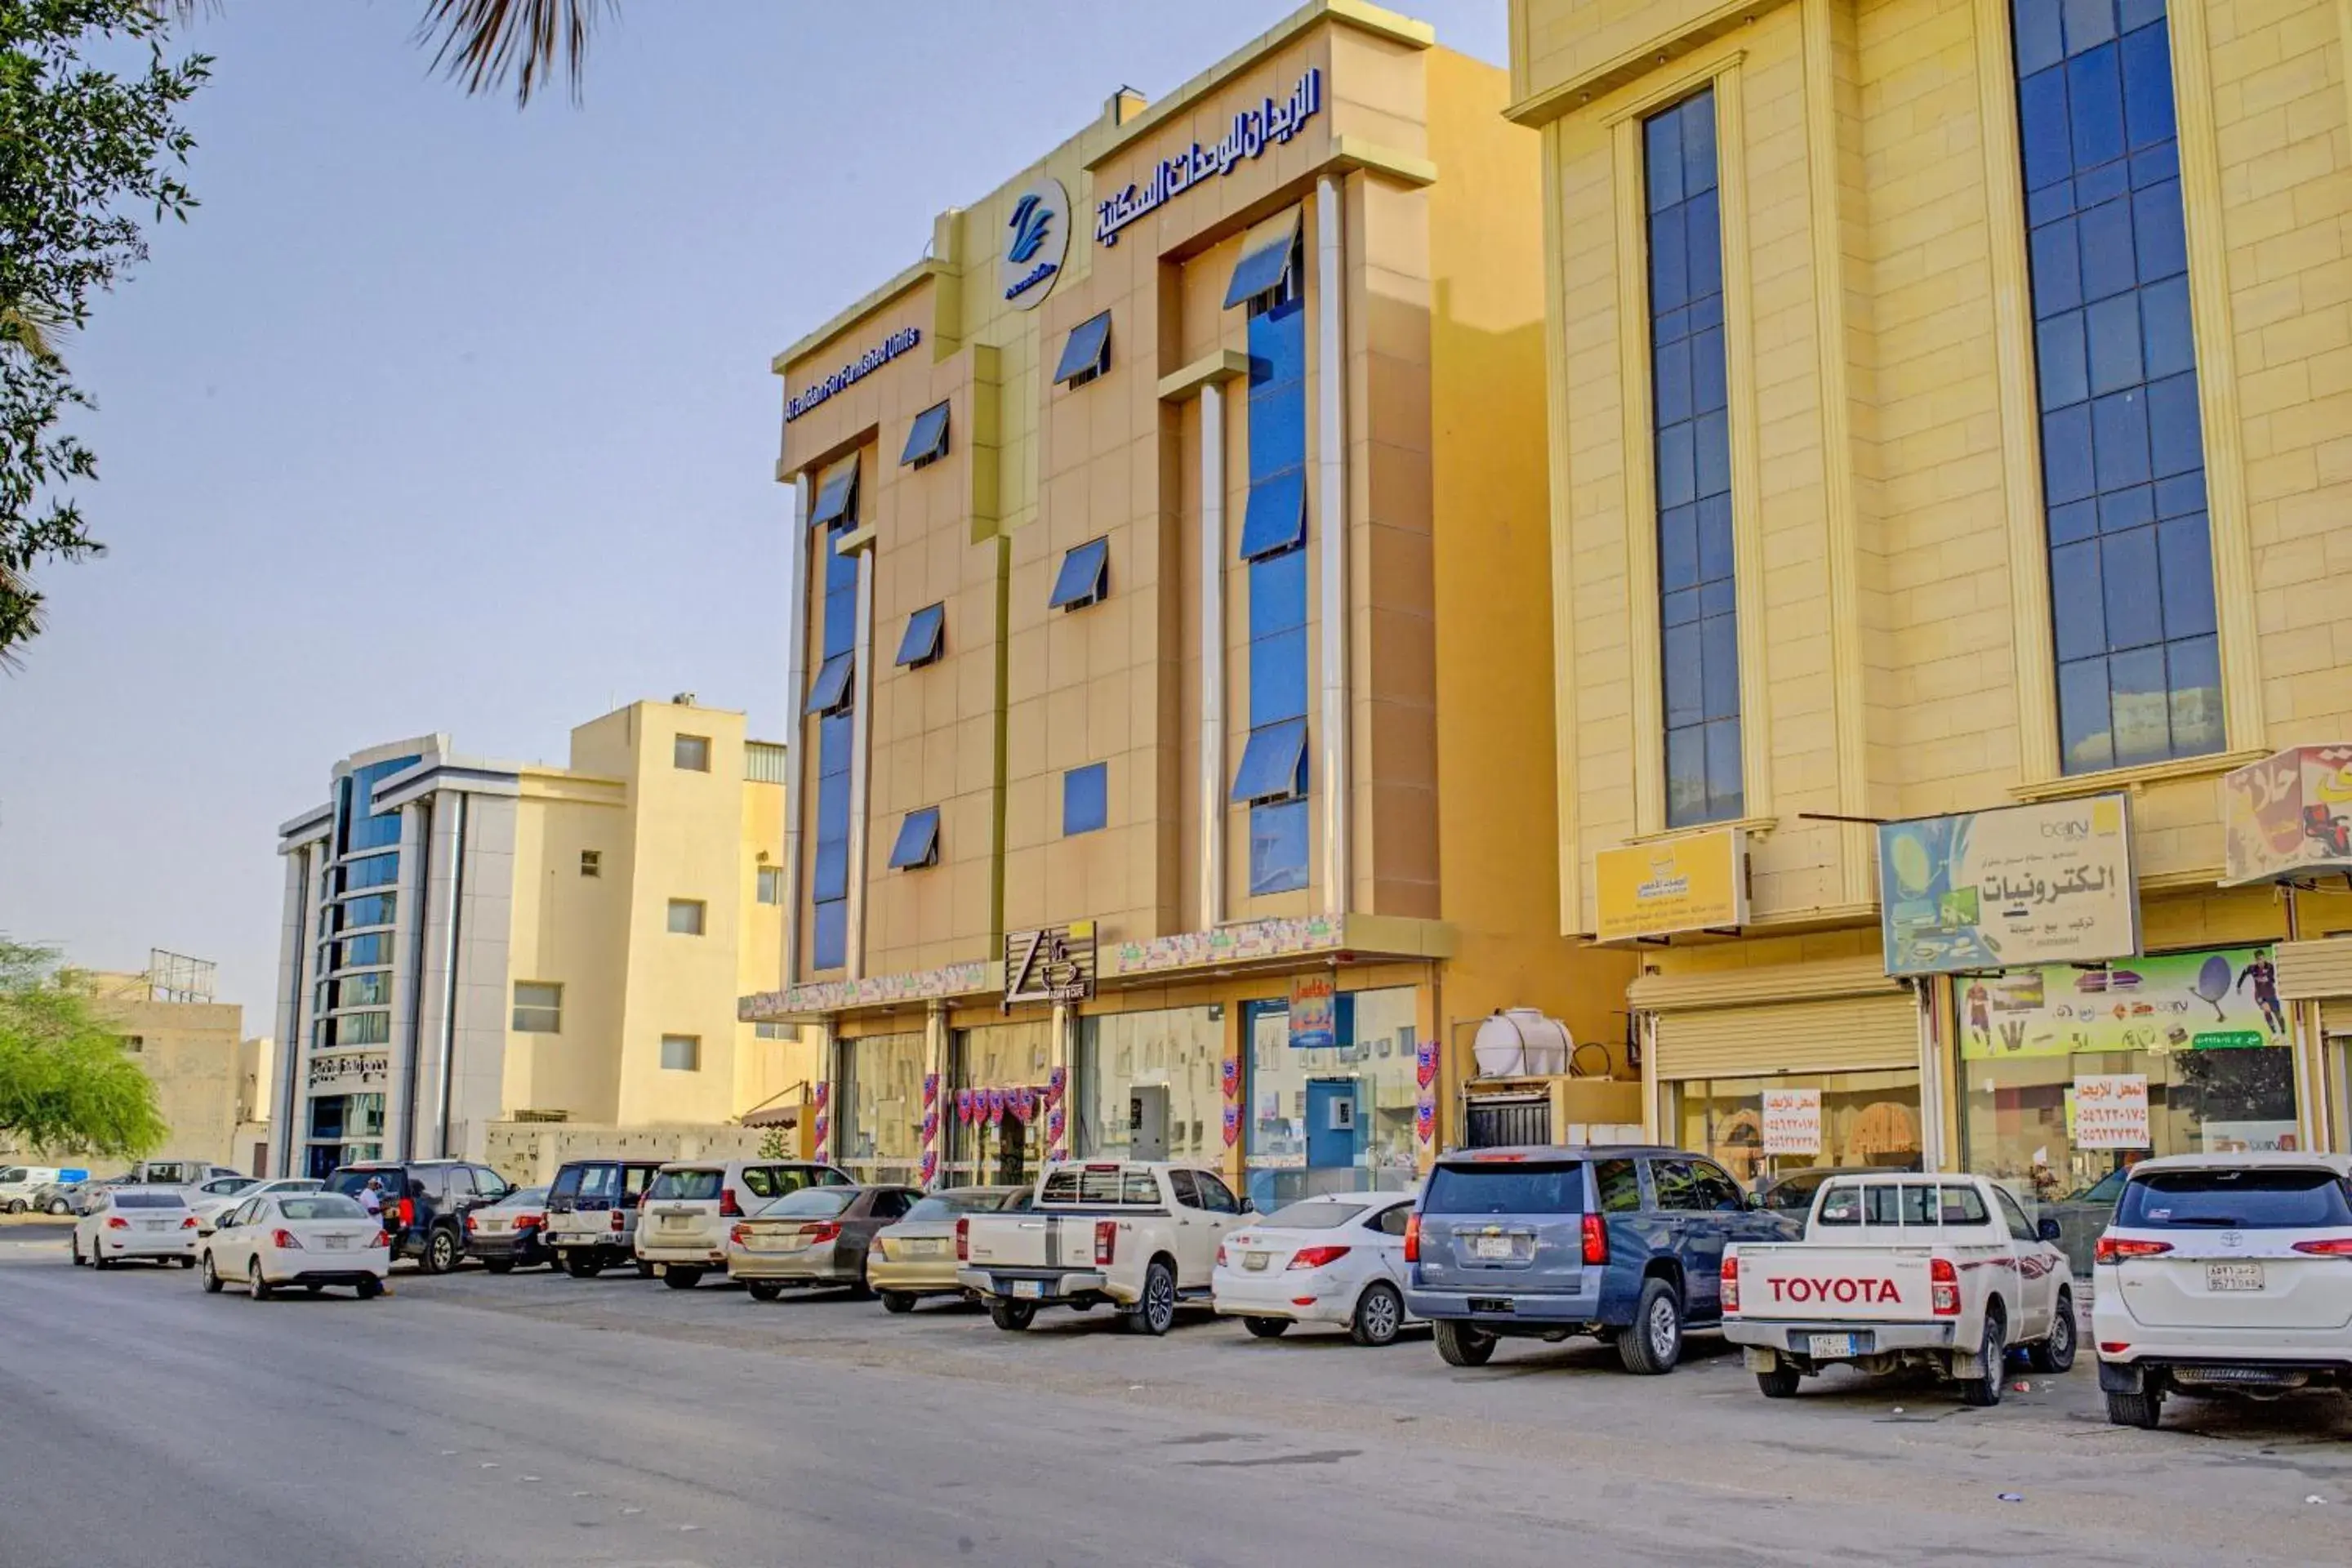 Property Building in OYO 401 Al Zaidan For Furnished Units